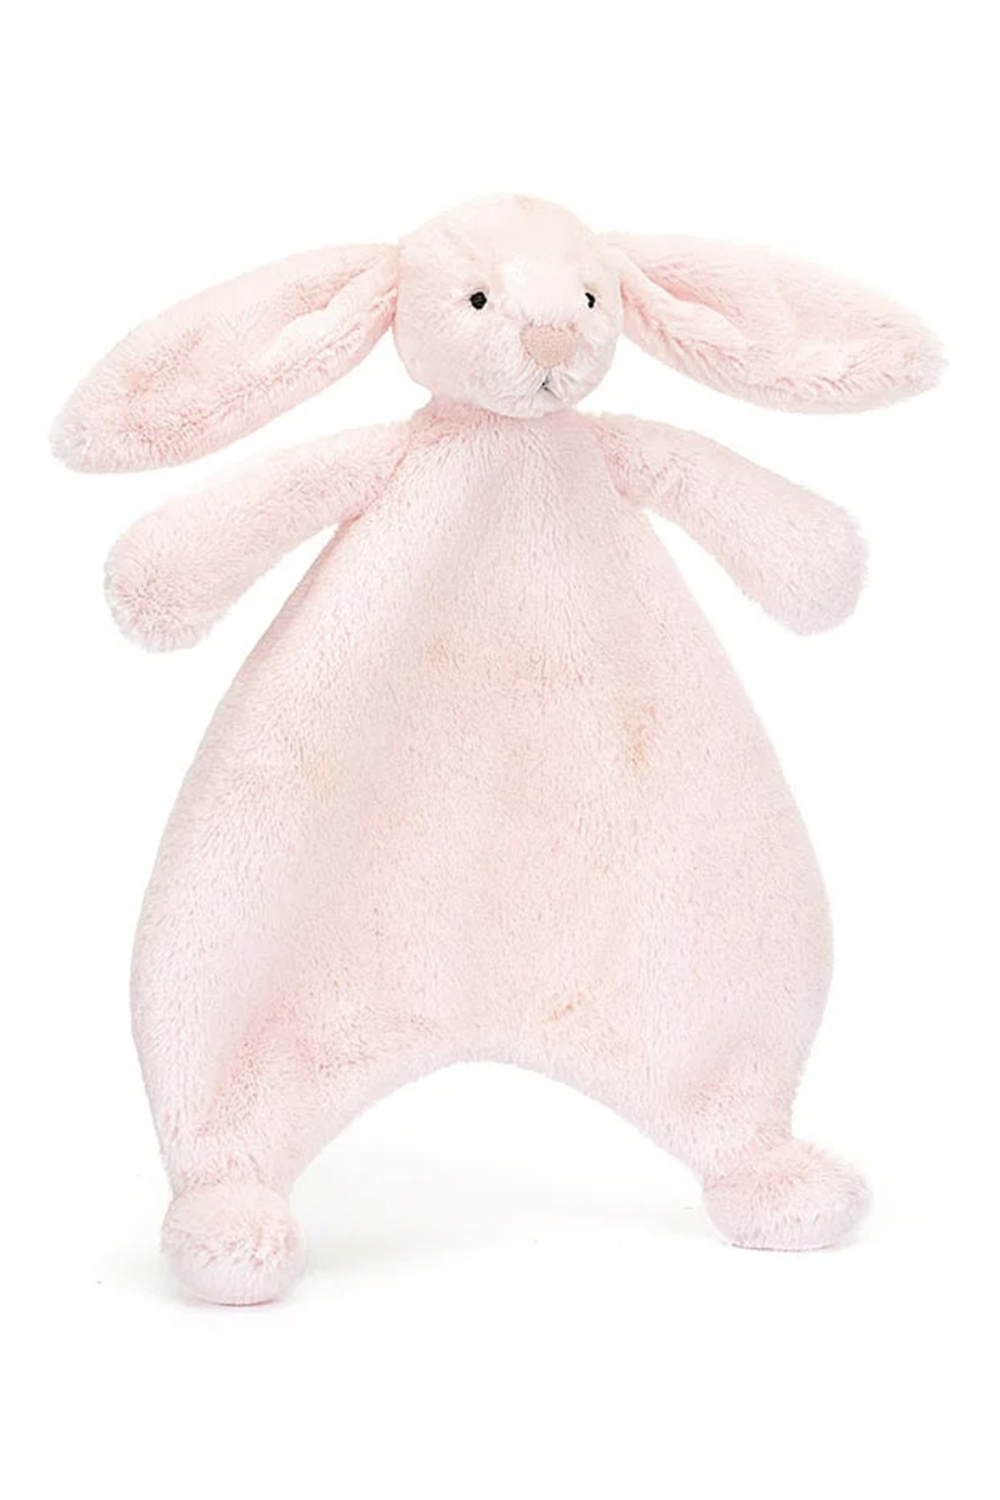 JELLYCAT Bashful Comforter - Pink Bunny